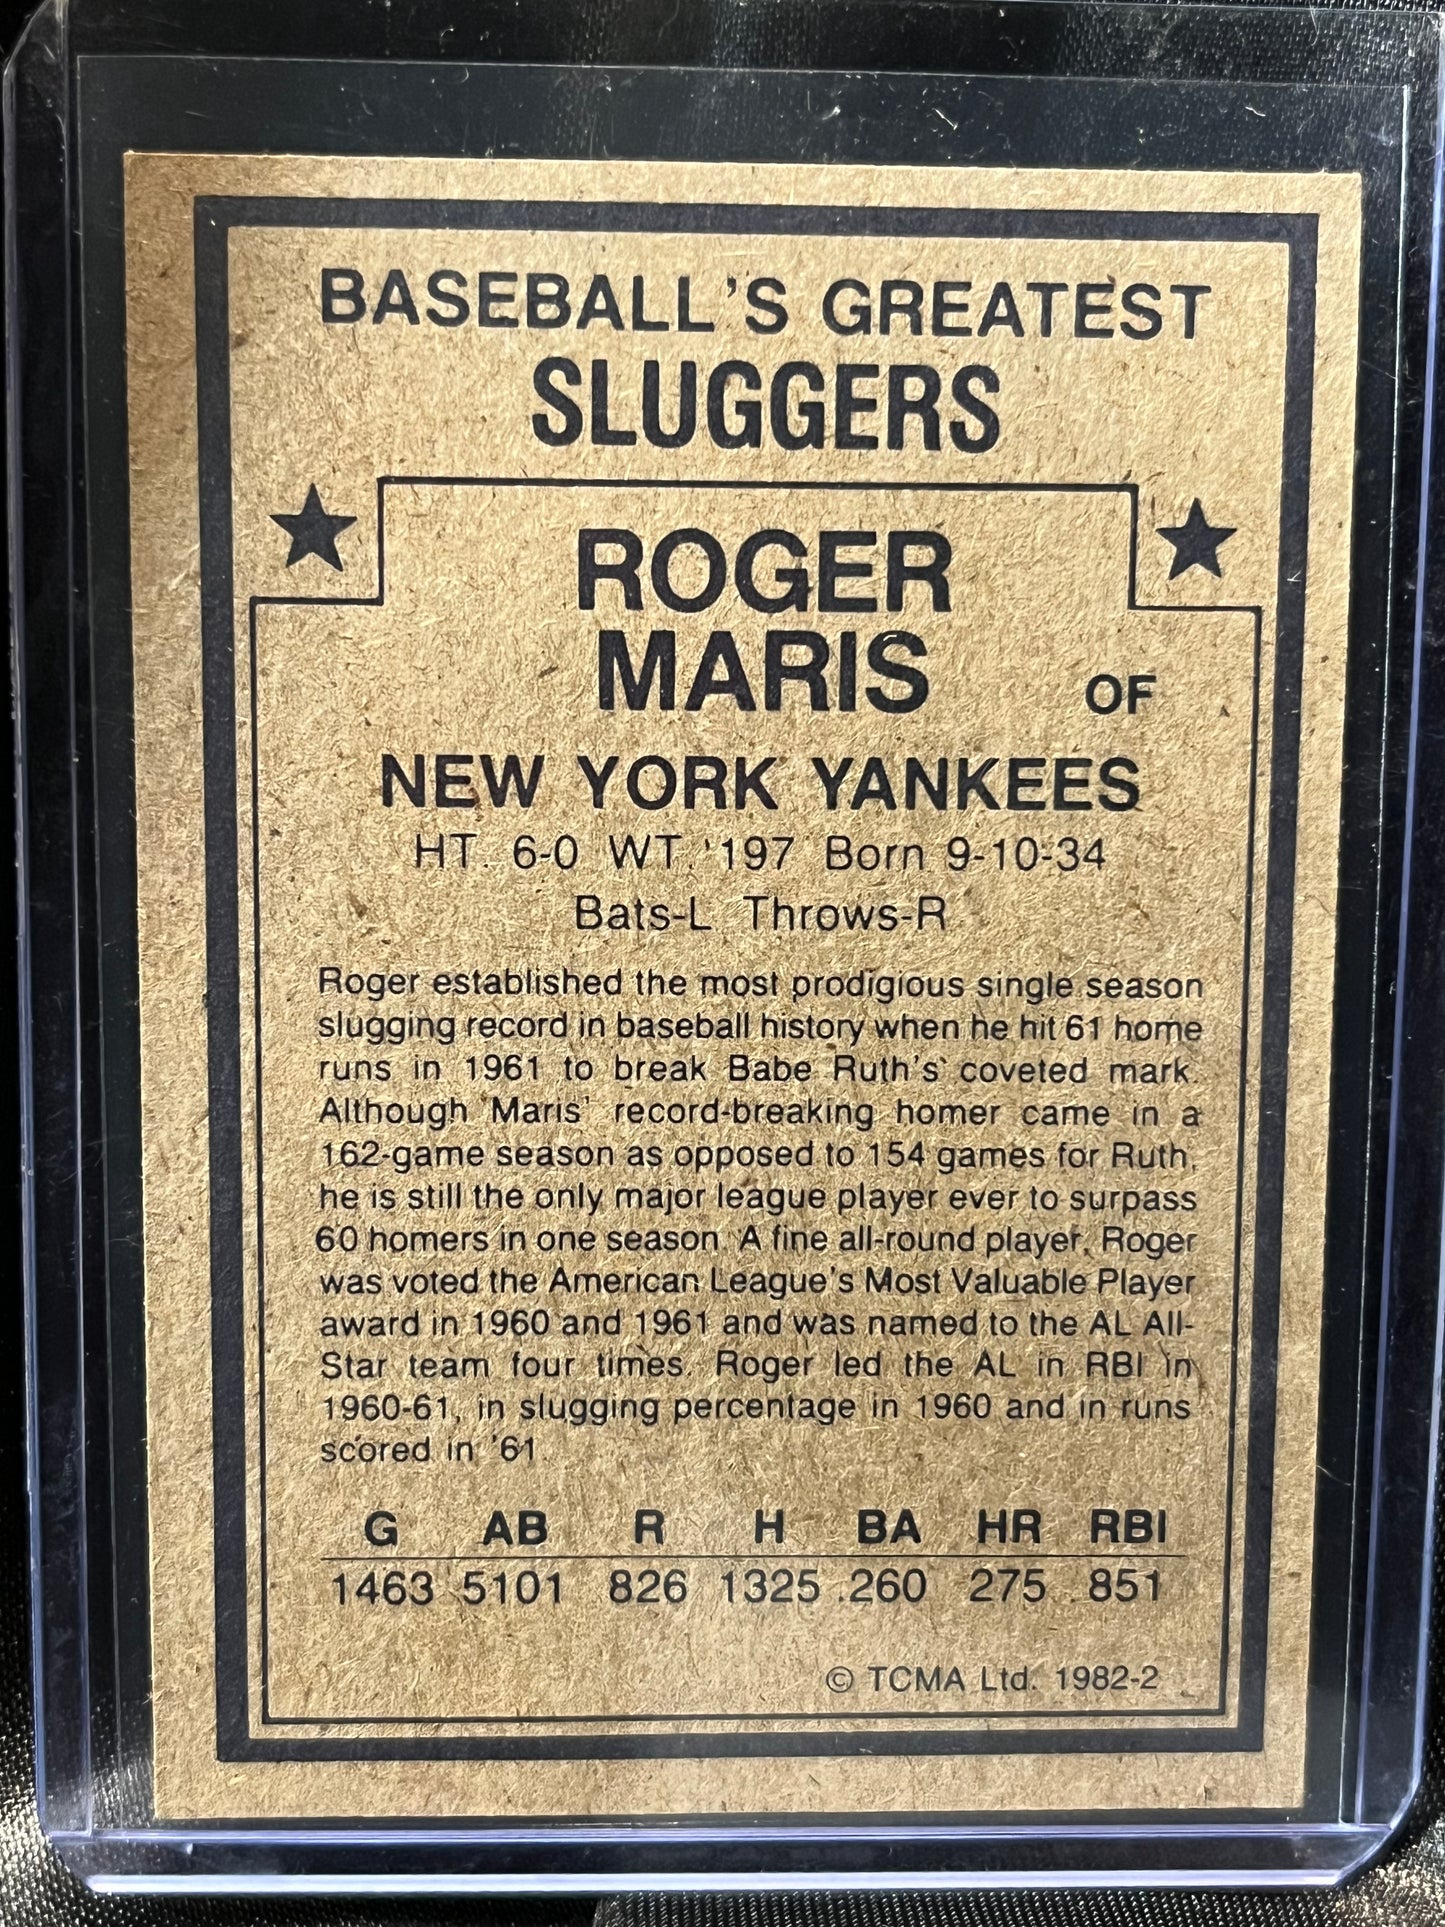 1982 TCMA Baseballs Greatest Sluggers Roger Maris #2 Yankees